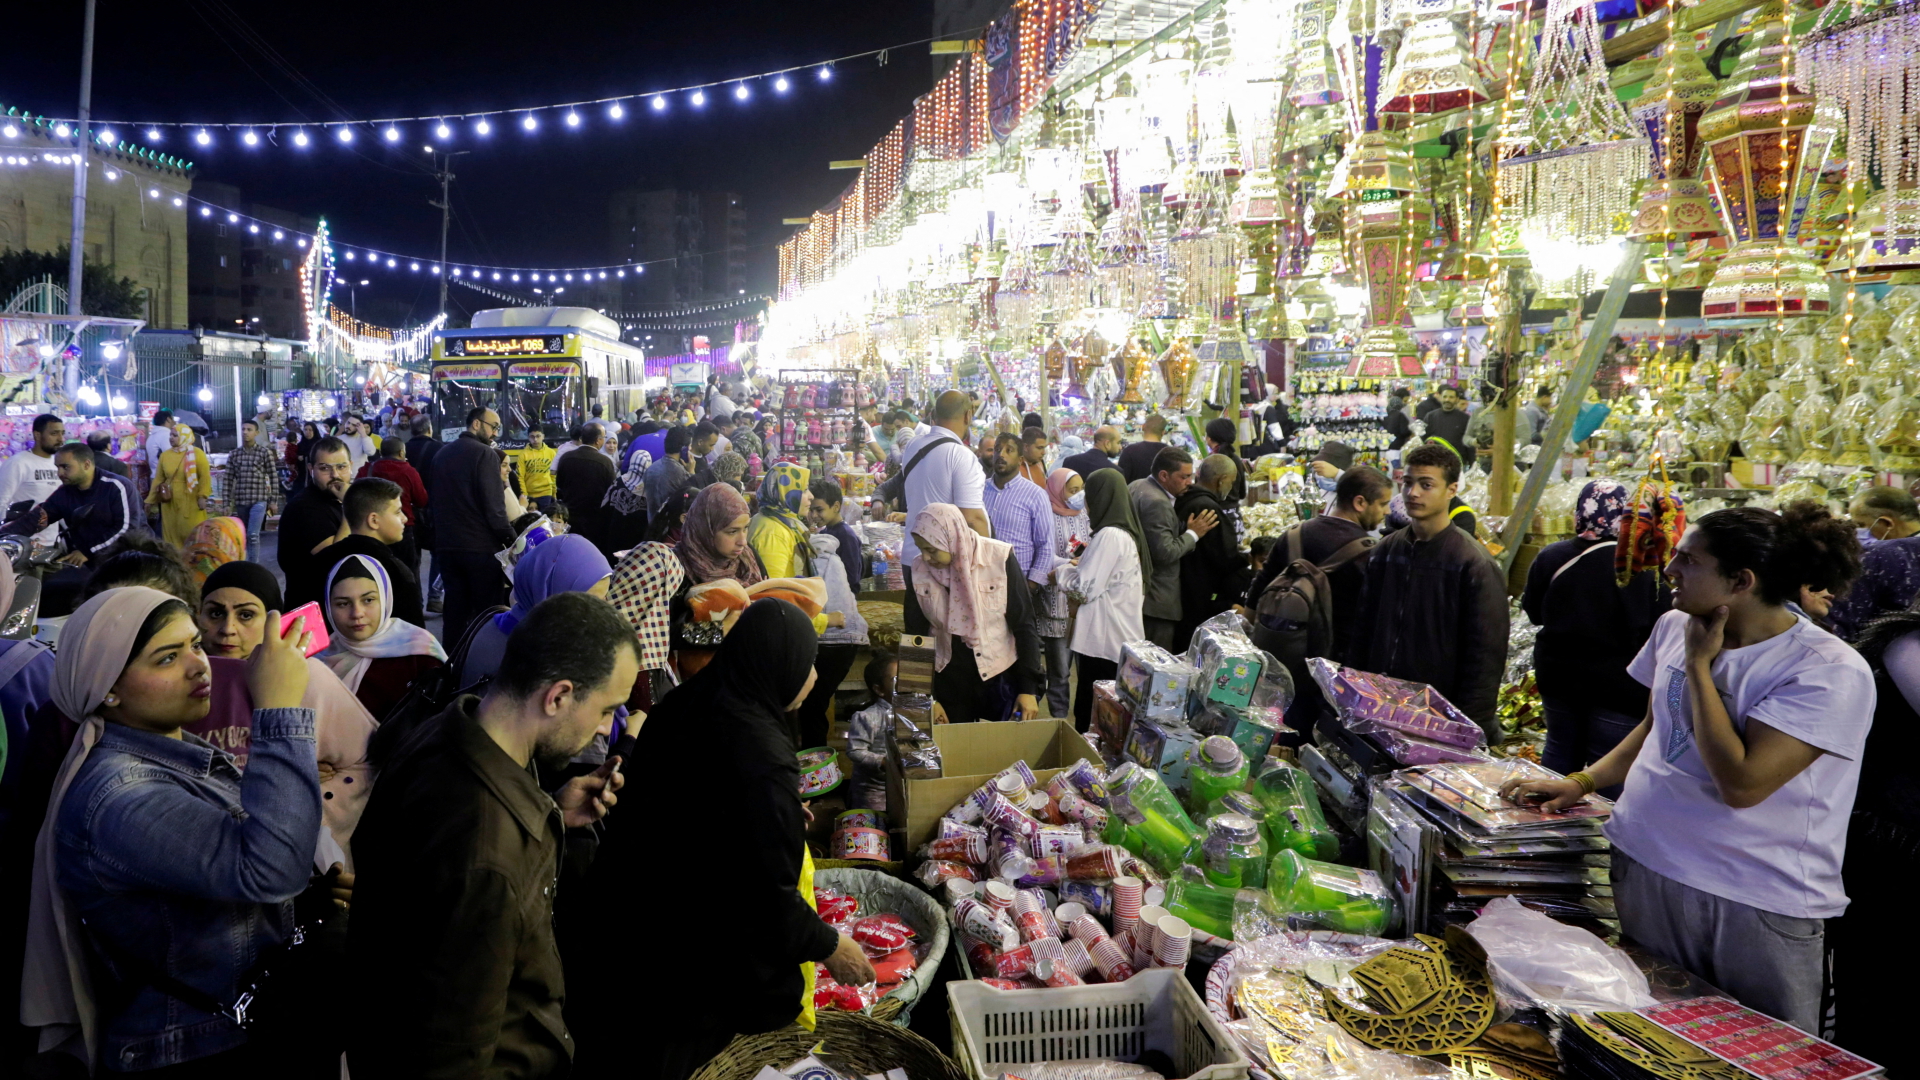 Ein Stand in Kairo bietet traditionelle Fanous-Lampen an. | REUTERS